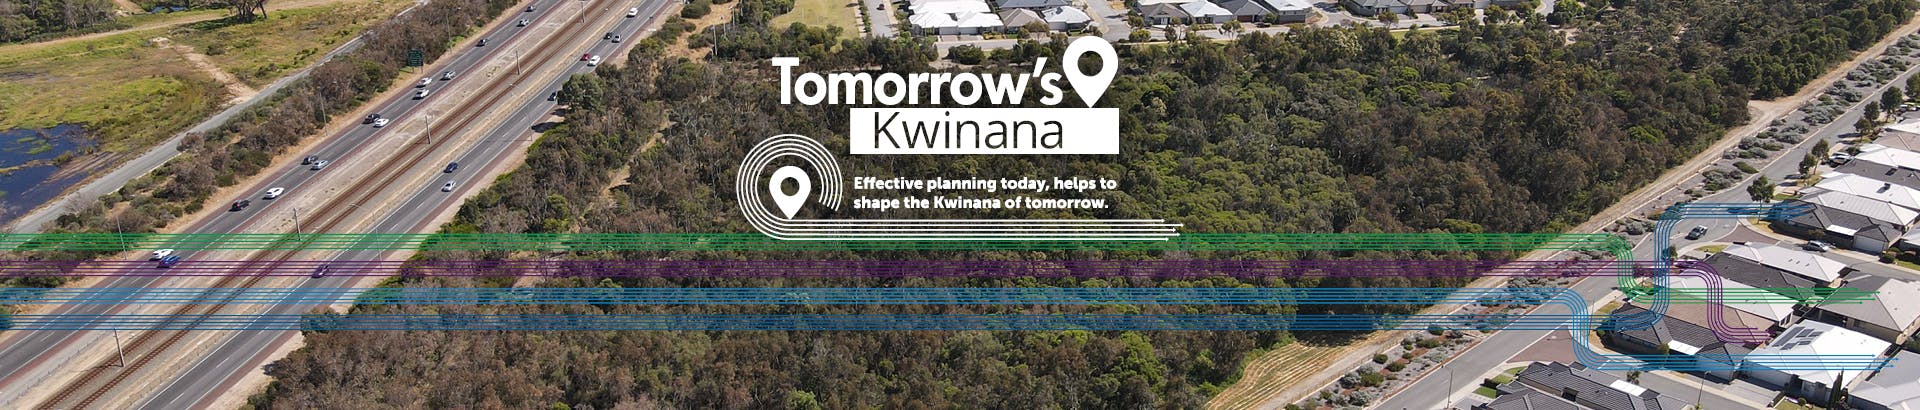 city of kwinana corporate business plan